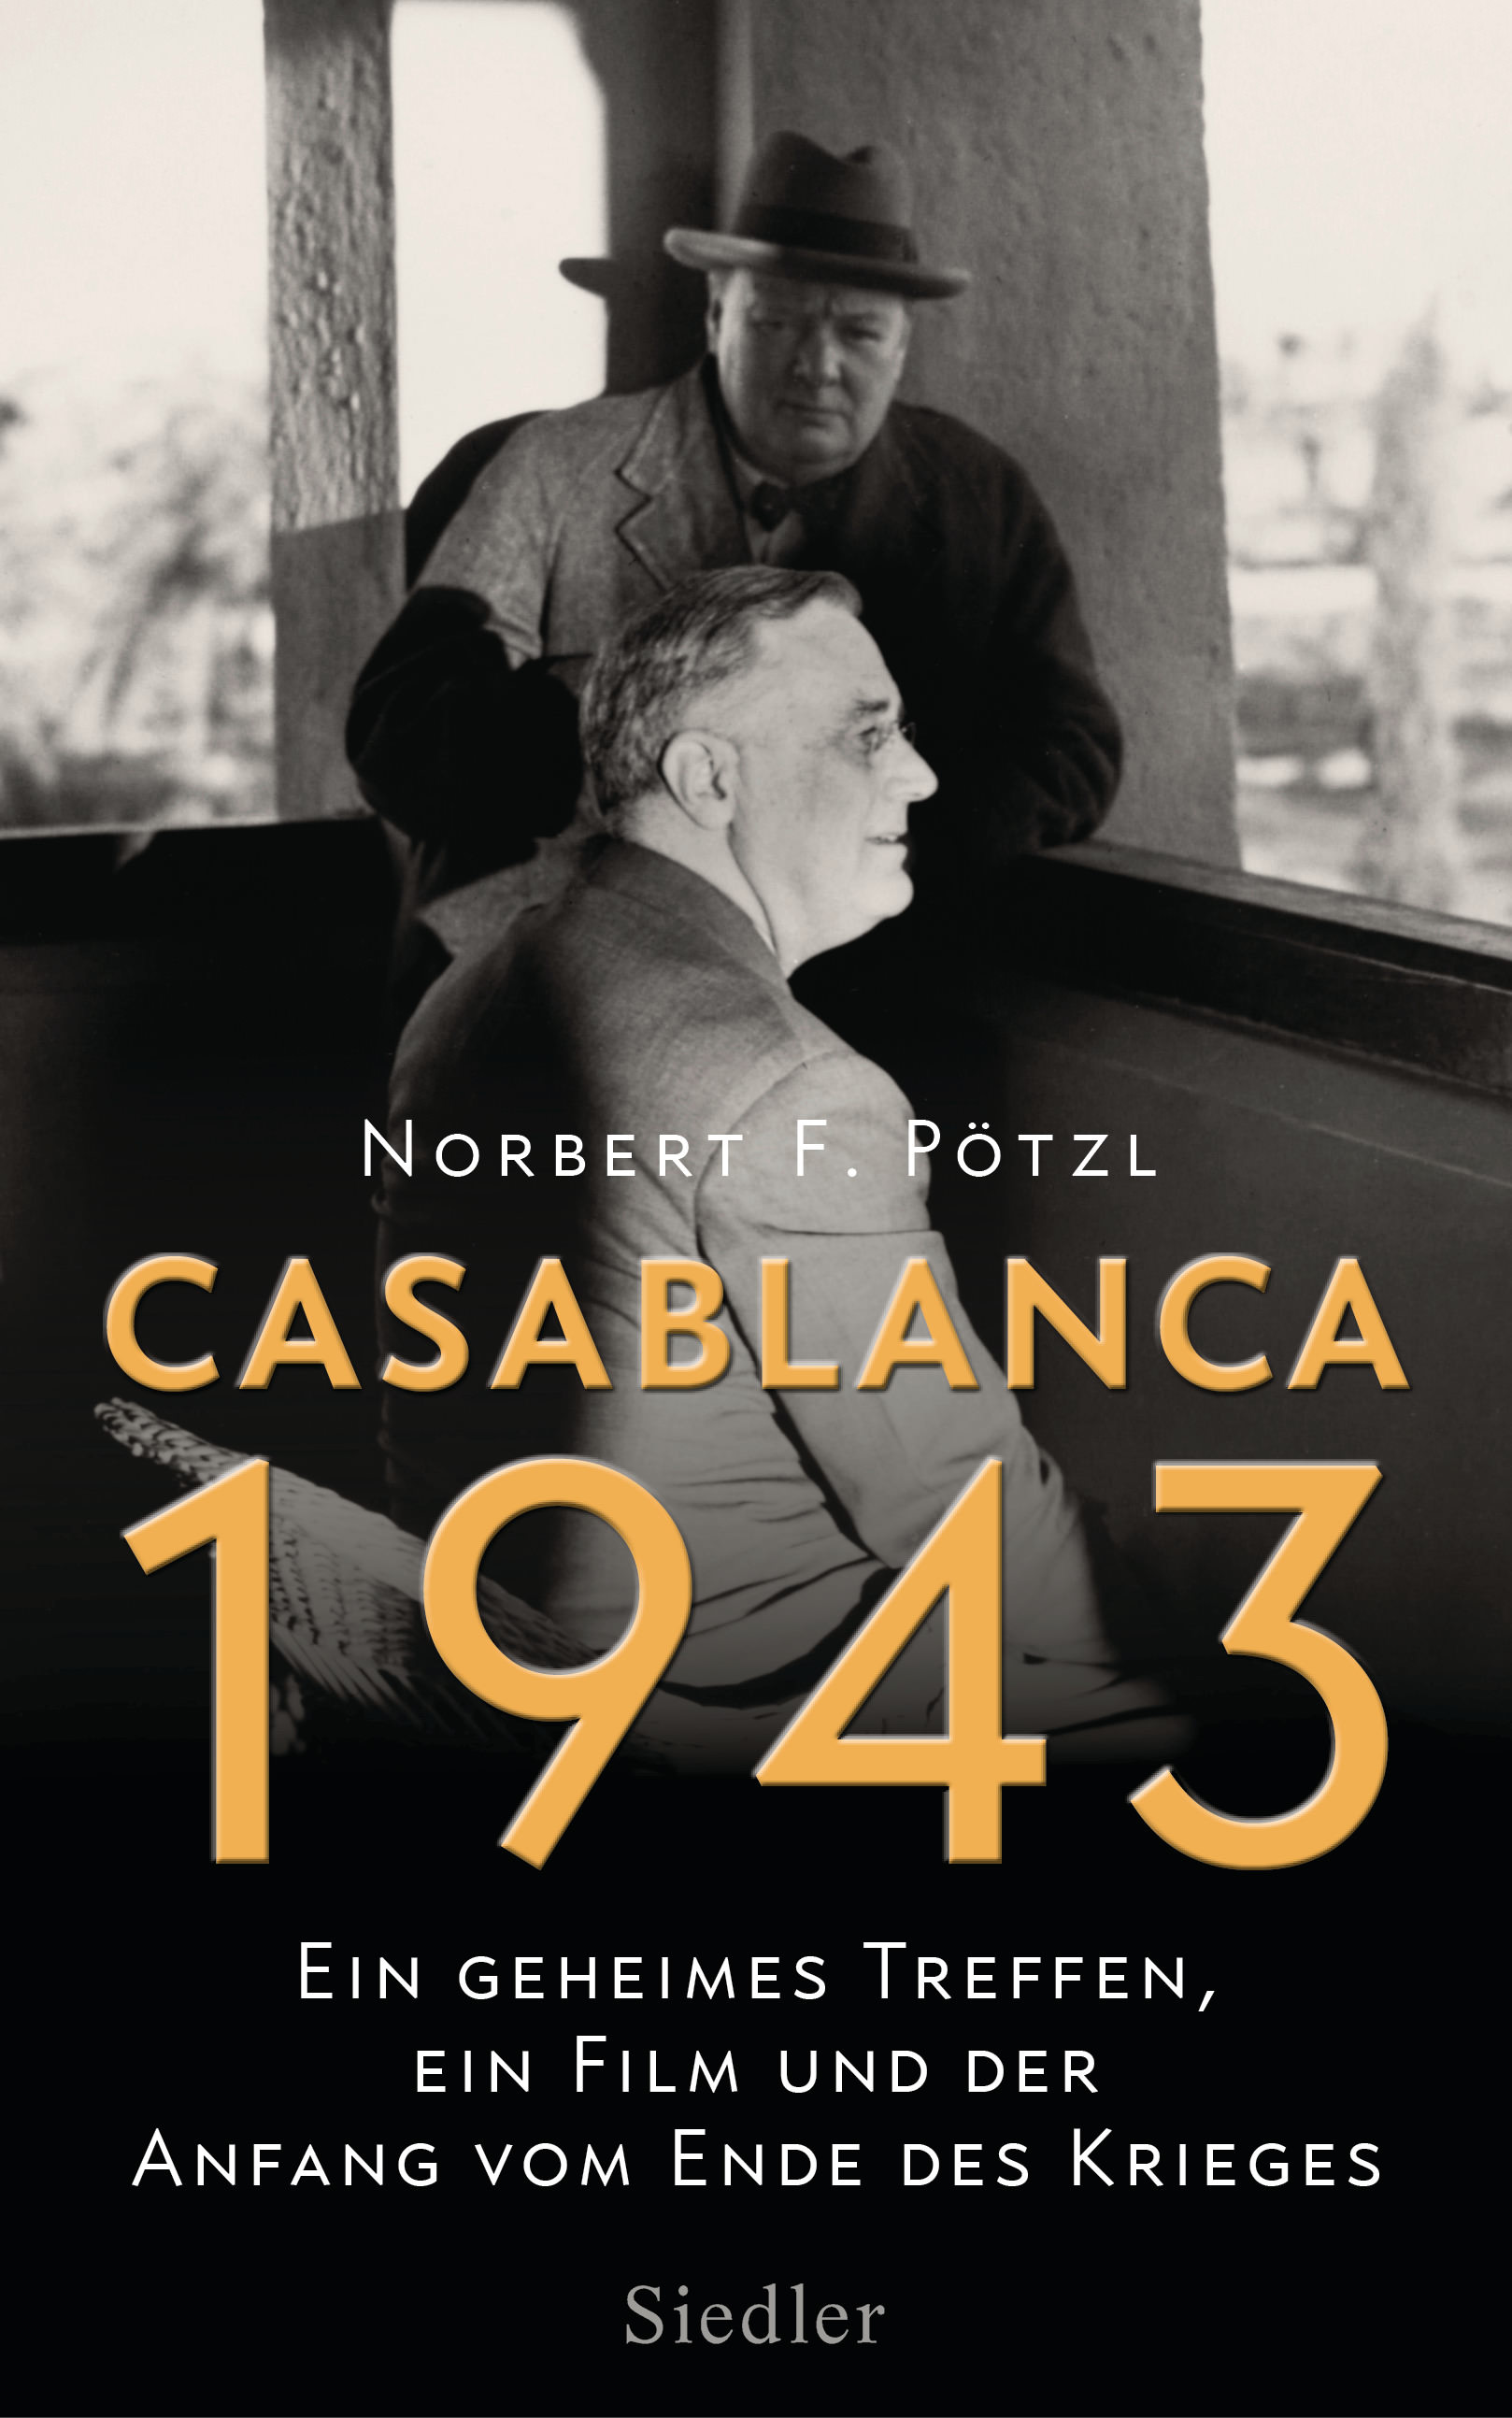 Norbert F. Pötzl: Casablanca 1943